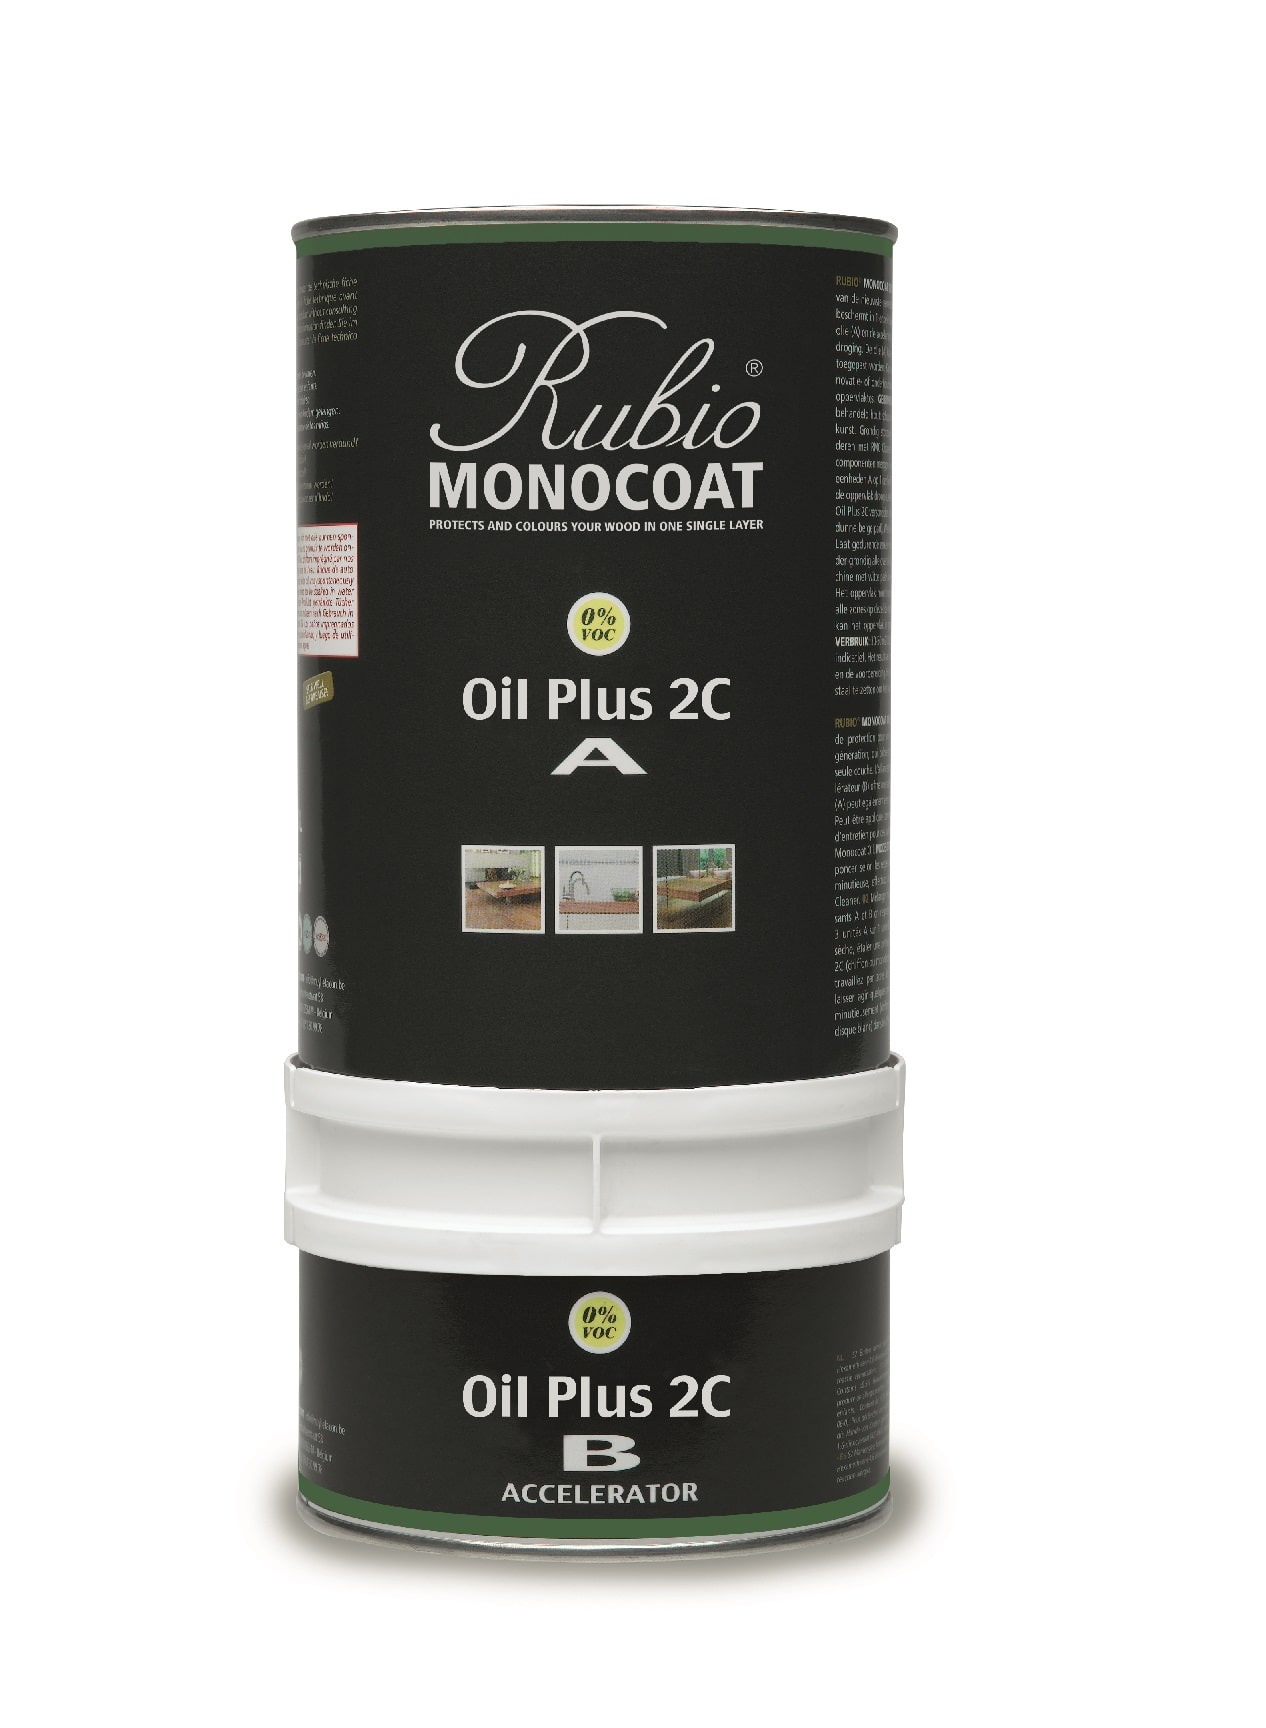 Billede af Rubio Monocoat olie Plus 2C White 5% 275 ml inkl. accelerator 75 ml.